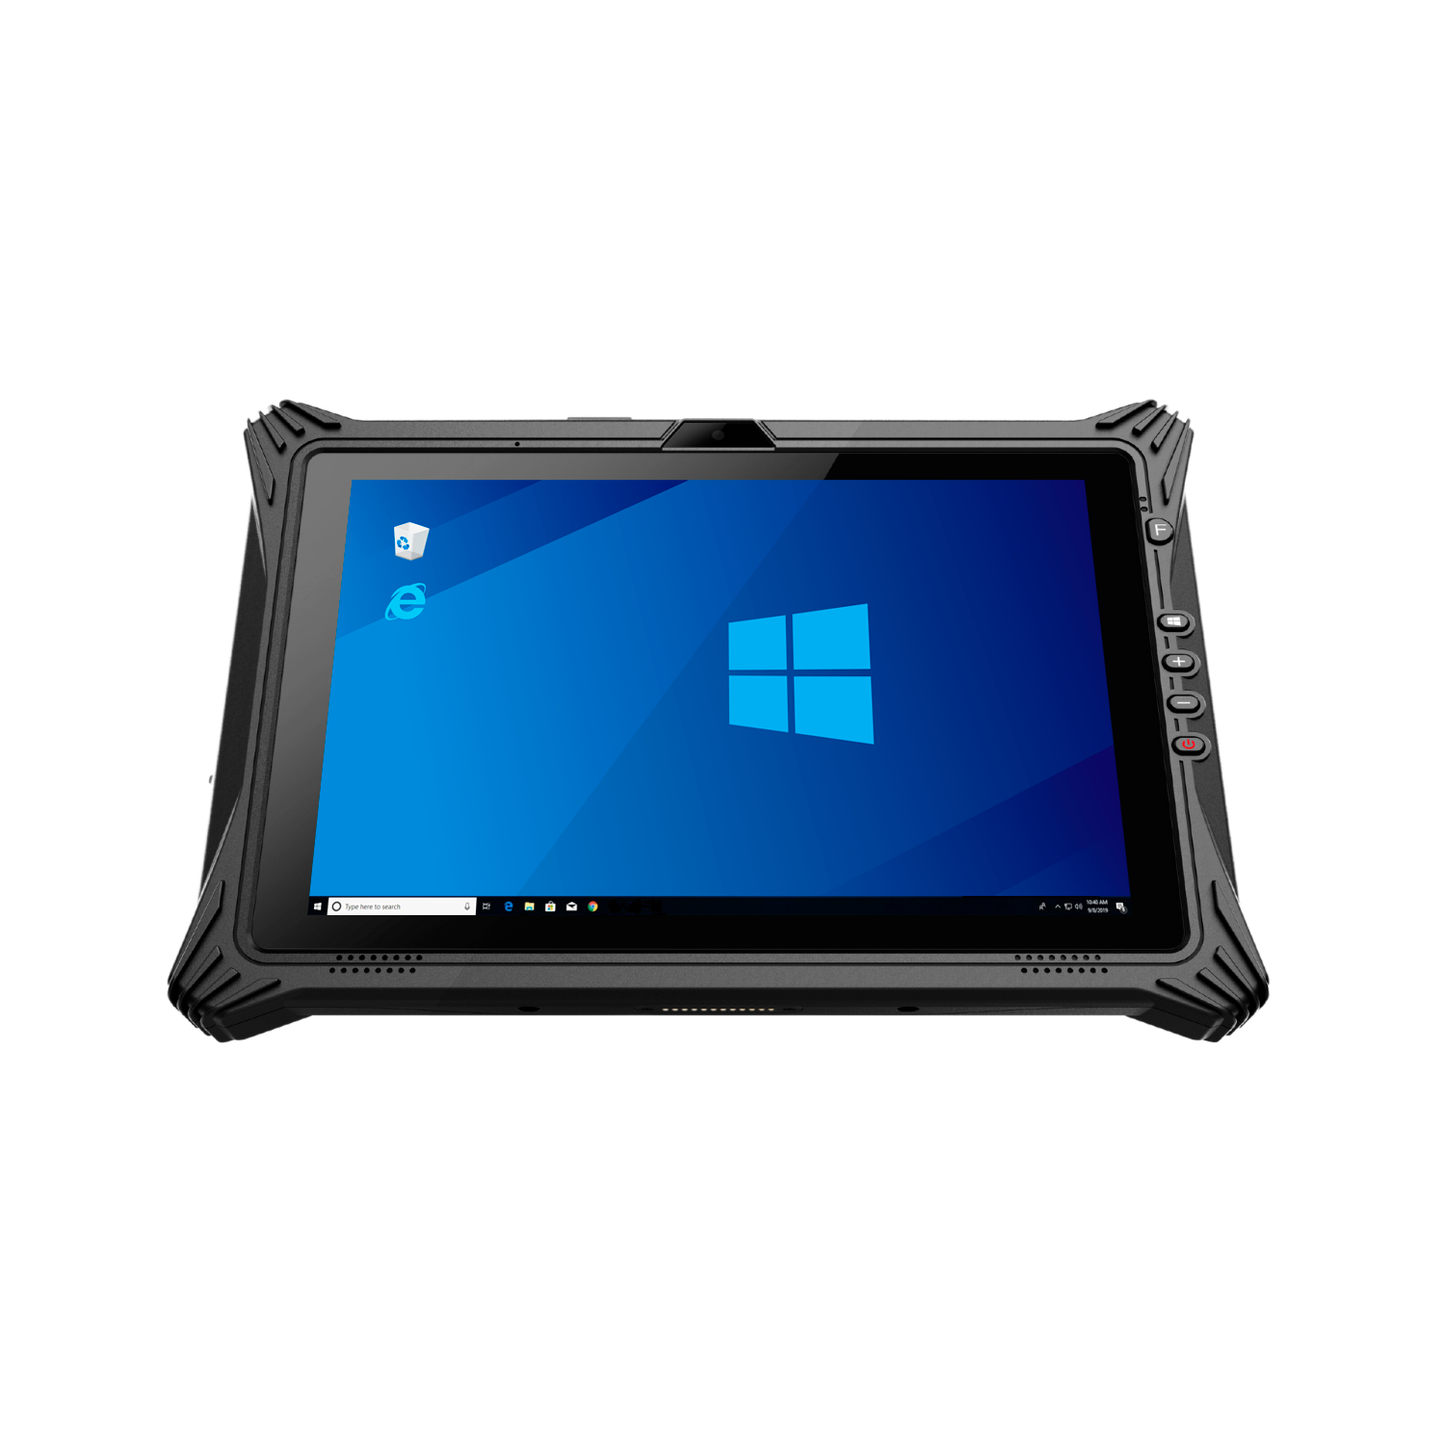 RT30, tablet robusta, tablet windows, rugged tablet, industrial rugged tablet, tableta robusta windows, logistica, industria, logistics tablet